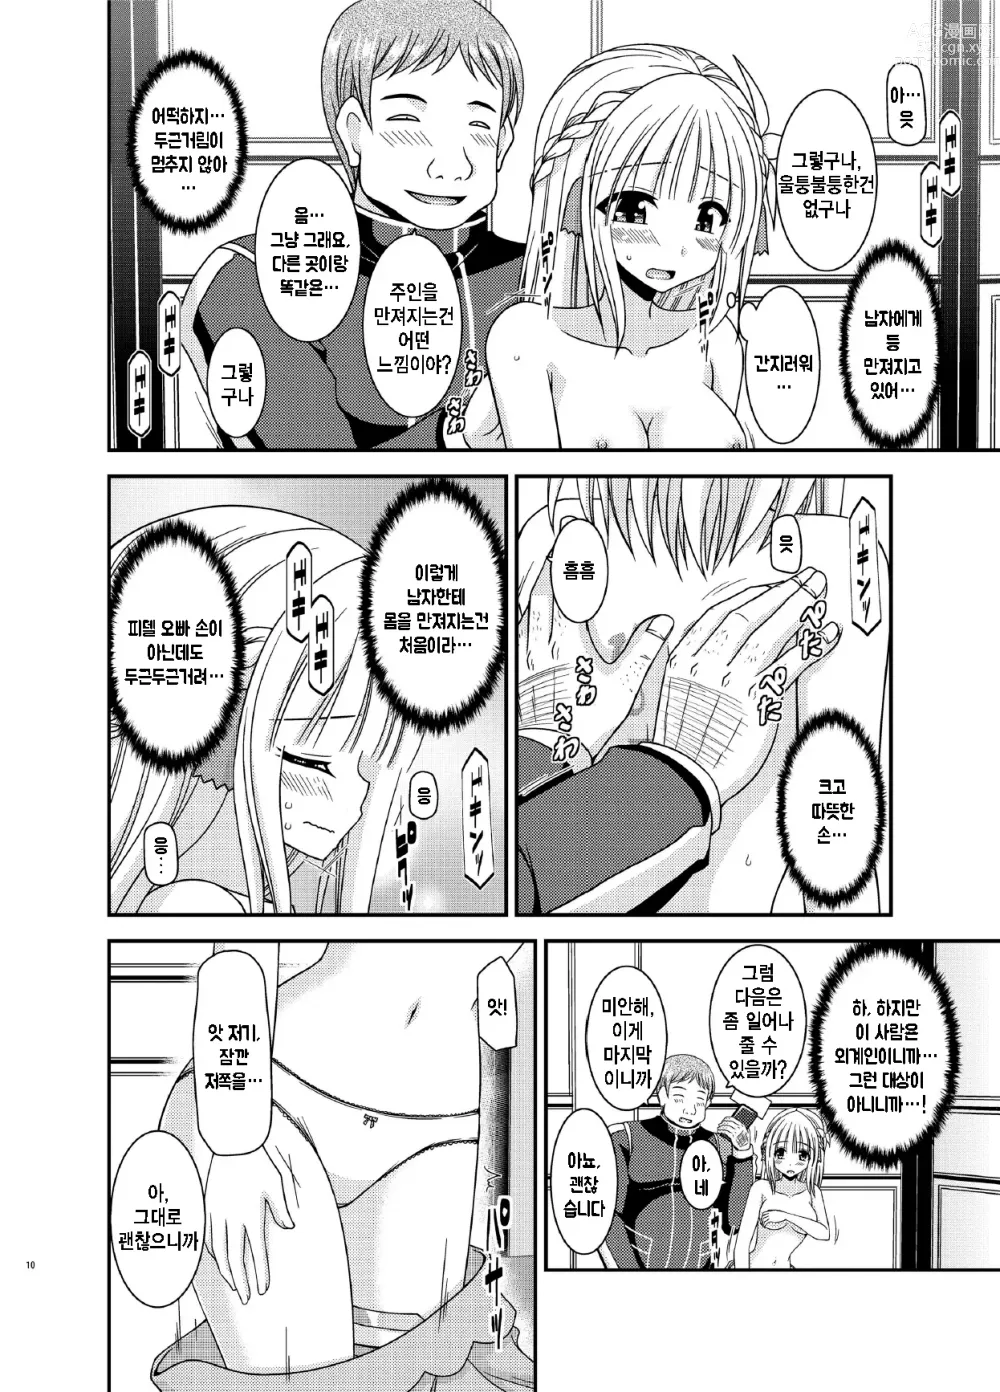 Page 9 of doujinshi Iseijin to no Sex wa No Count dakara...